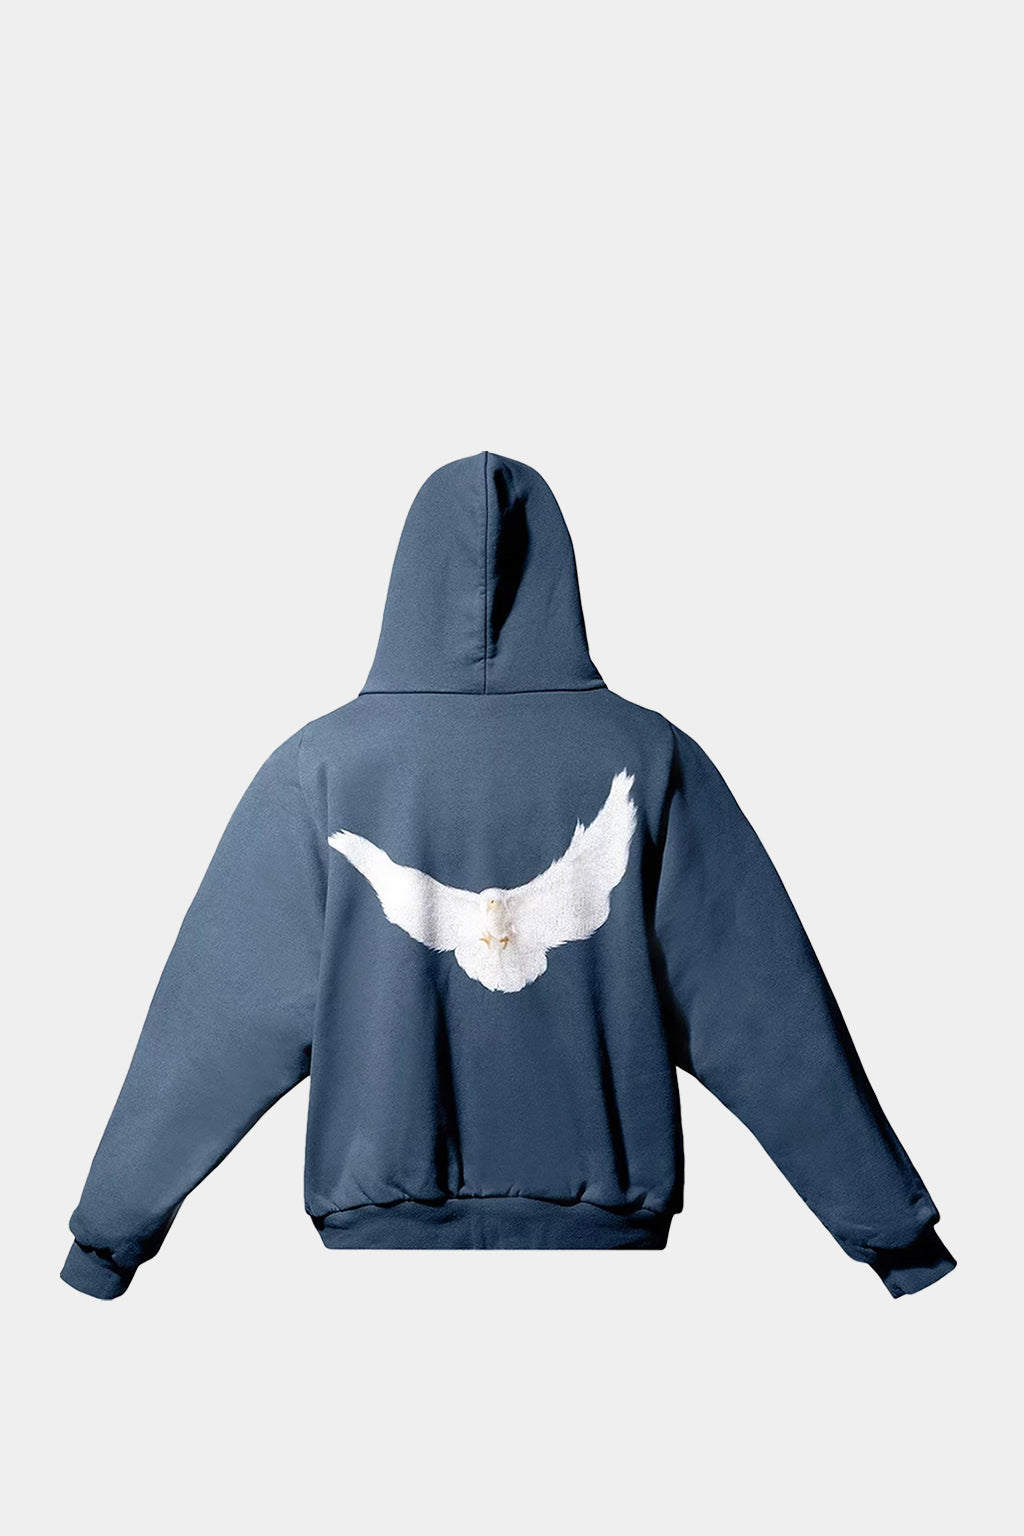 Yeezy Gap - Engineered By Balenciaga's Dove Shrunken Hoodie